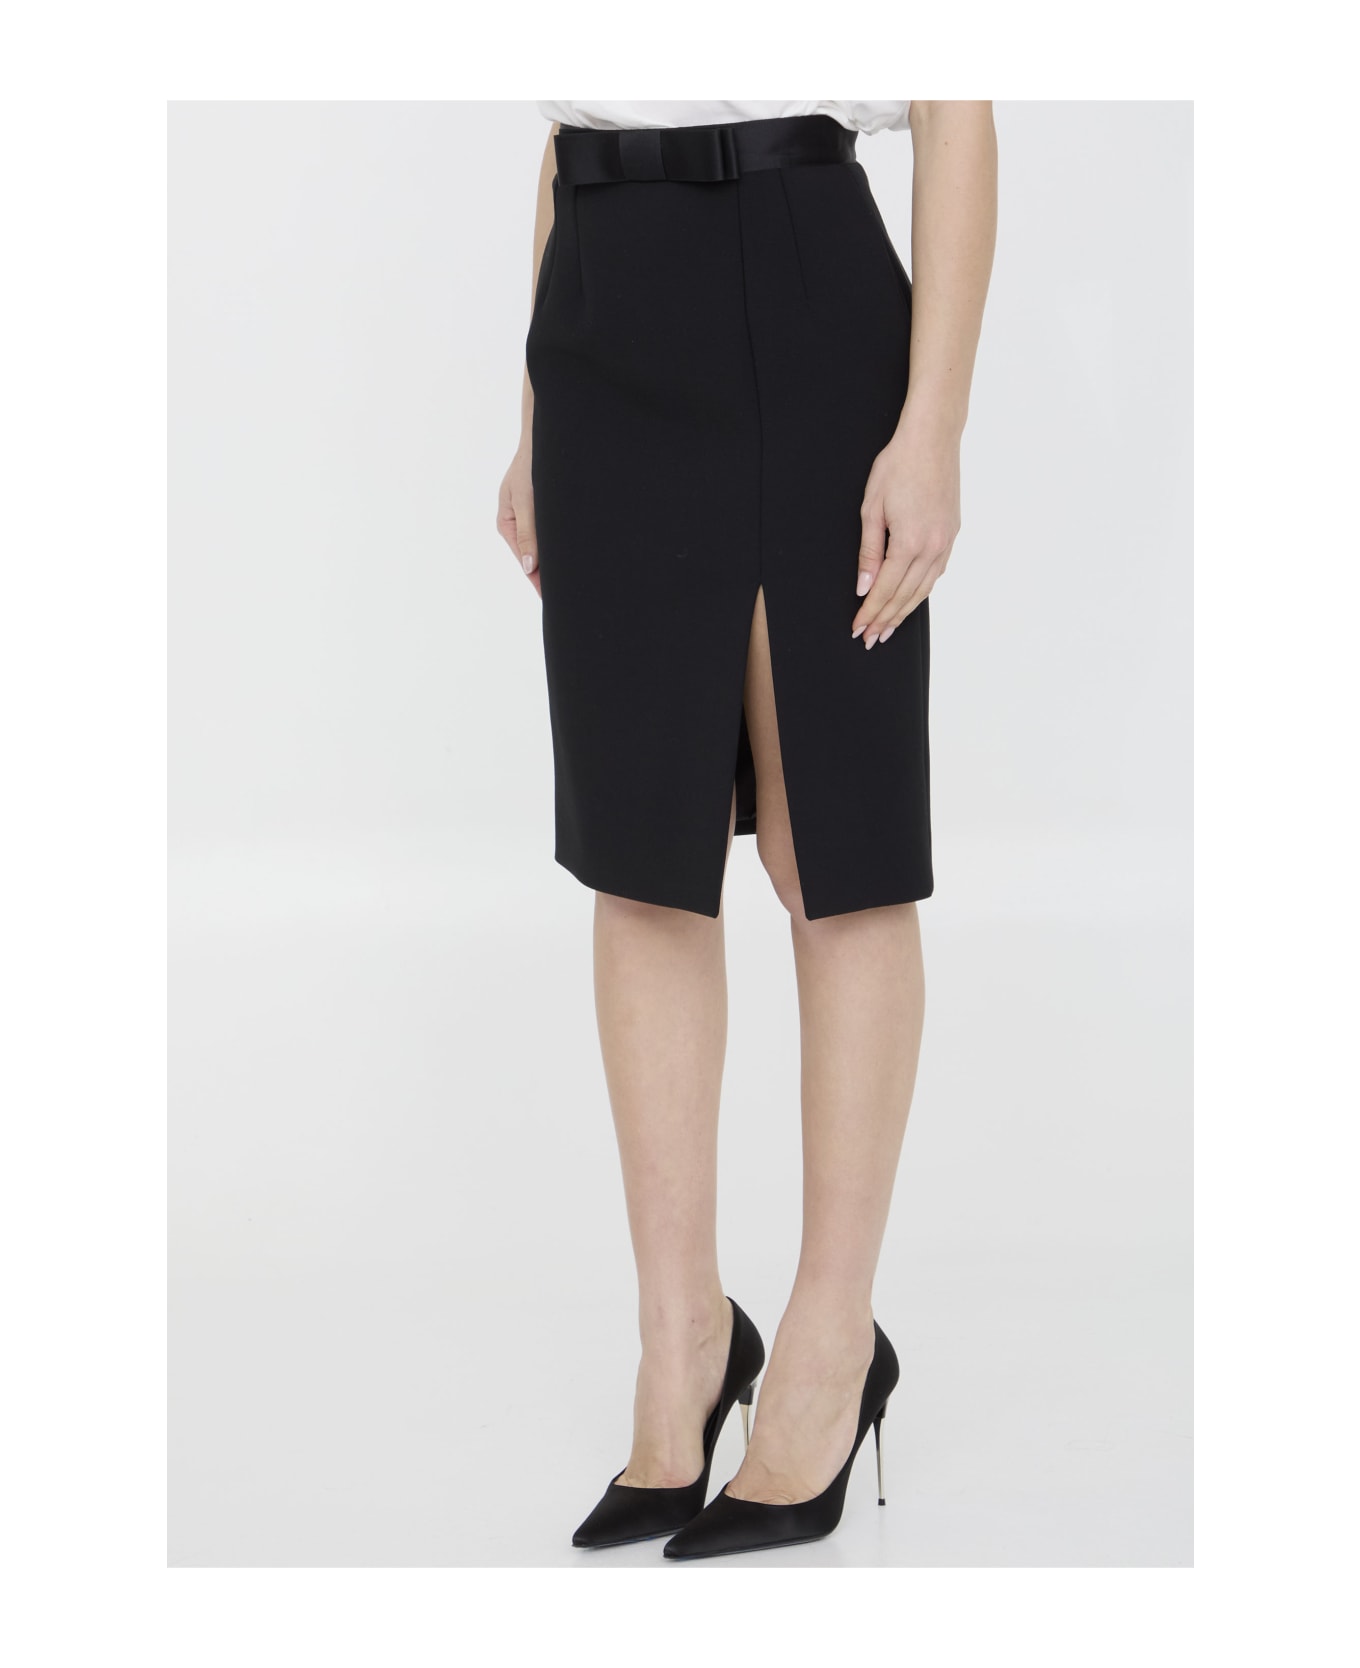 Dolce & Gabbana Wool Pencil Skirt - BLACK